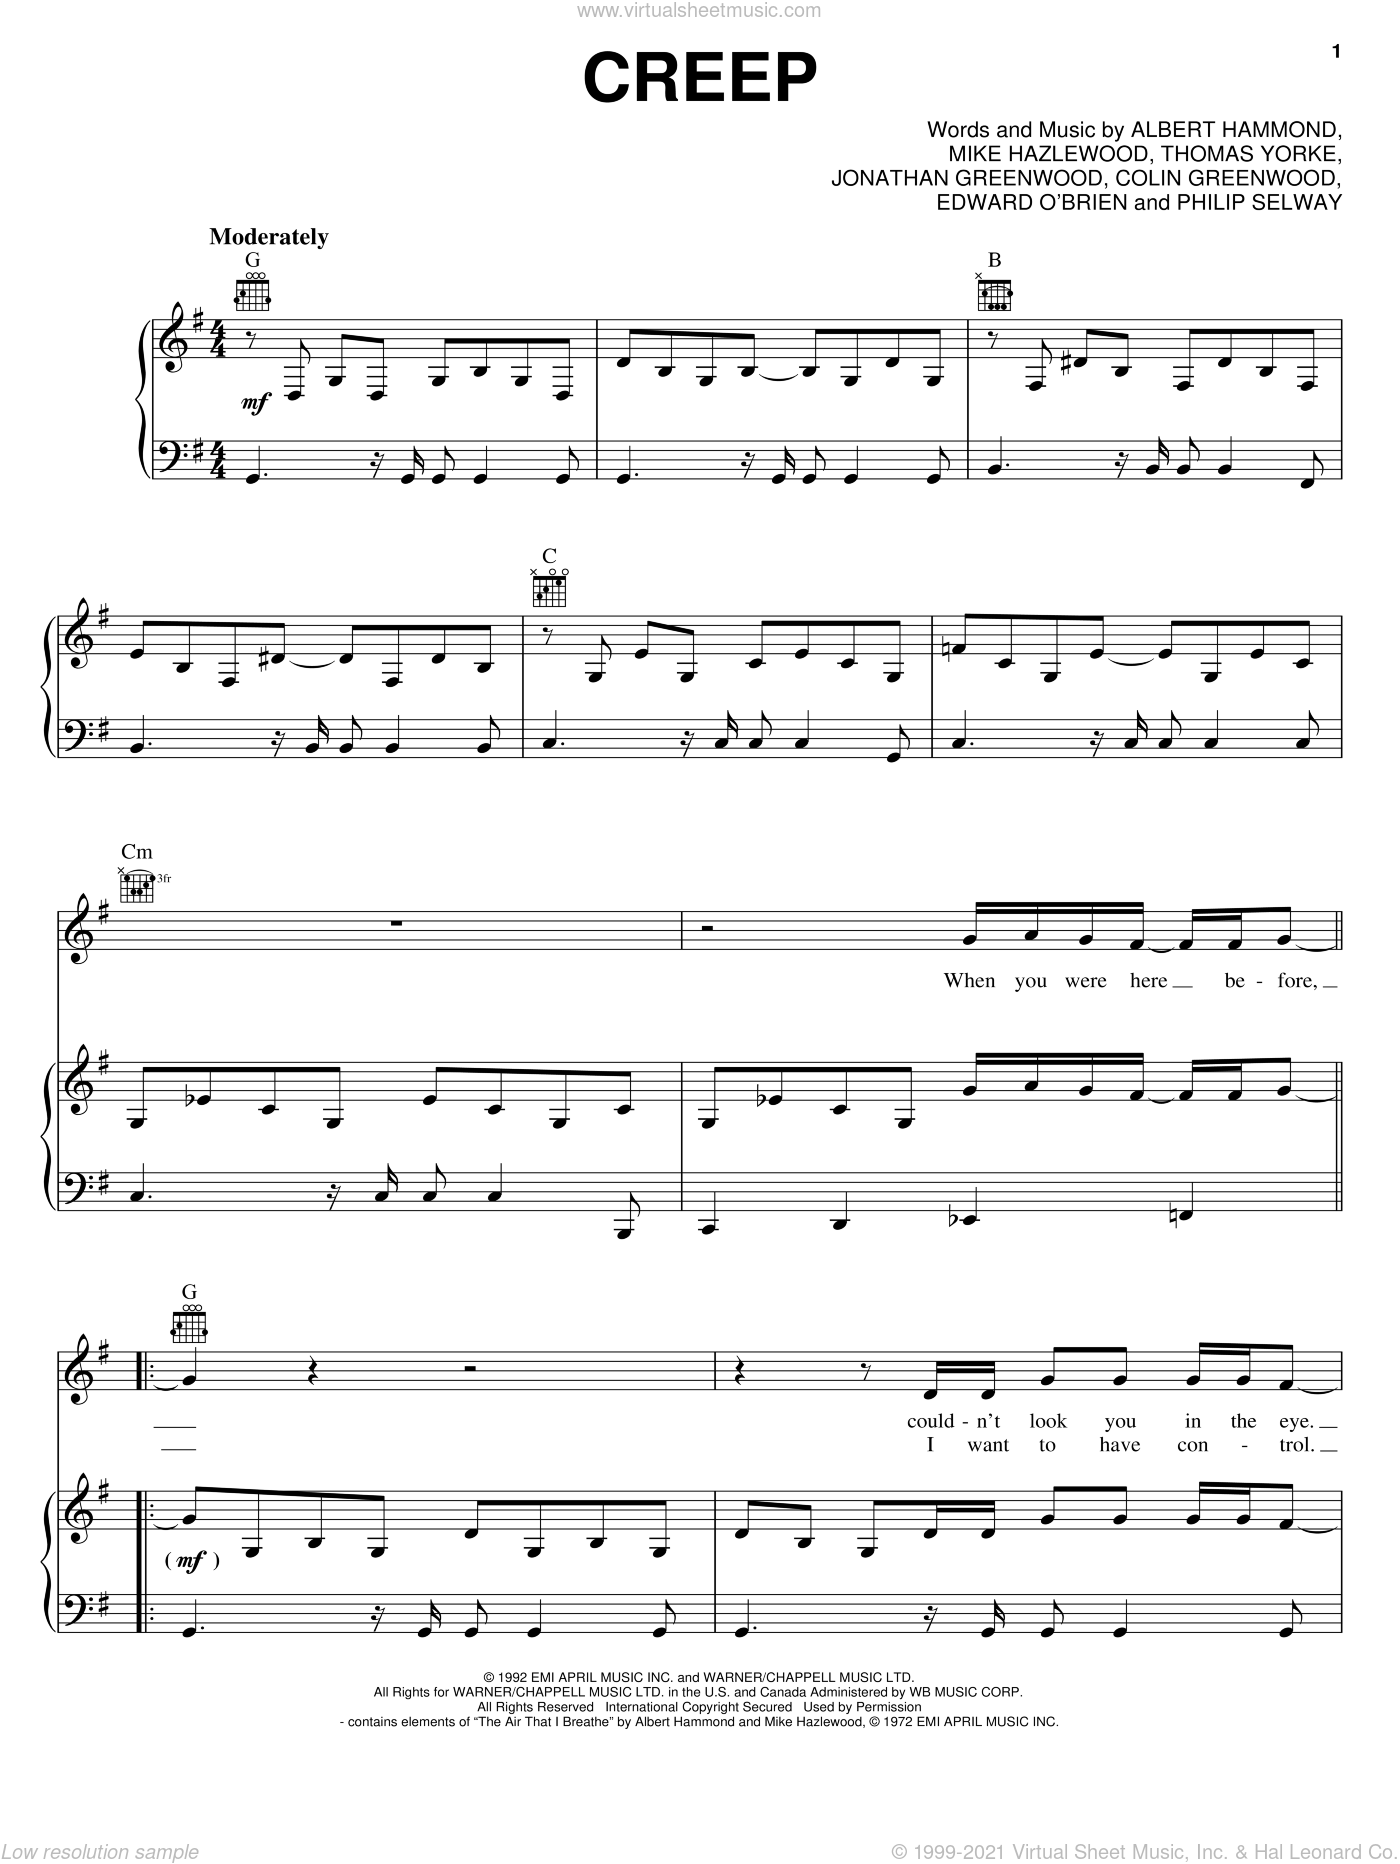 Radiohead - Creep sheet music for voice, piano or guitar v2